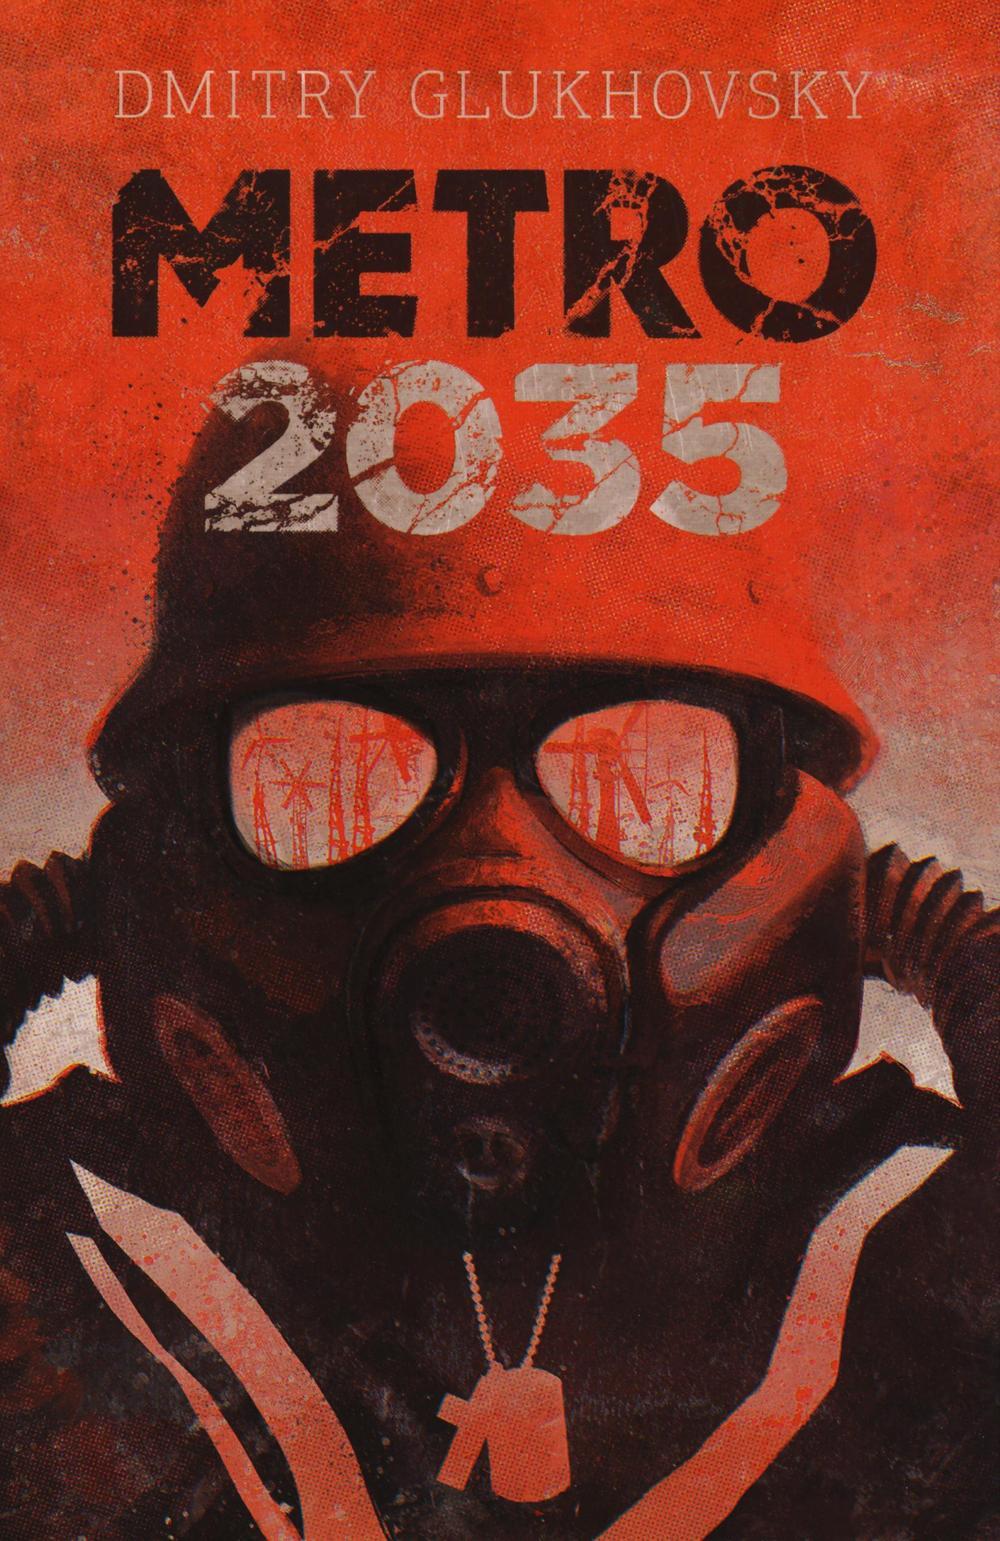 Metro 2035 (2016, Heyne Verlag)